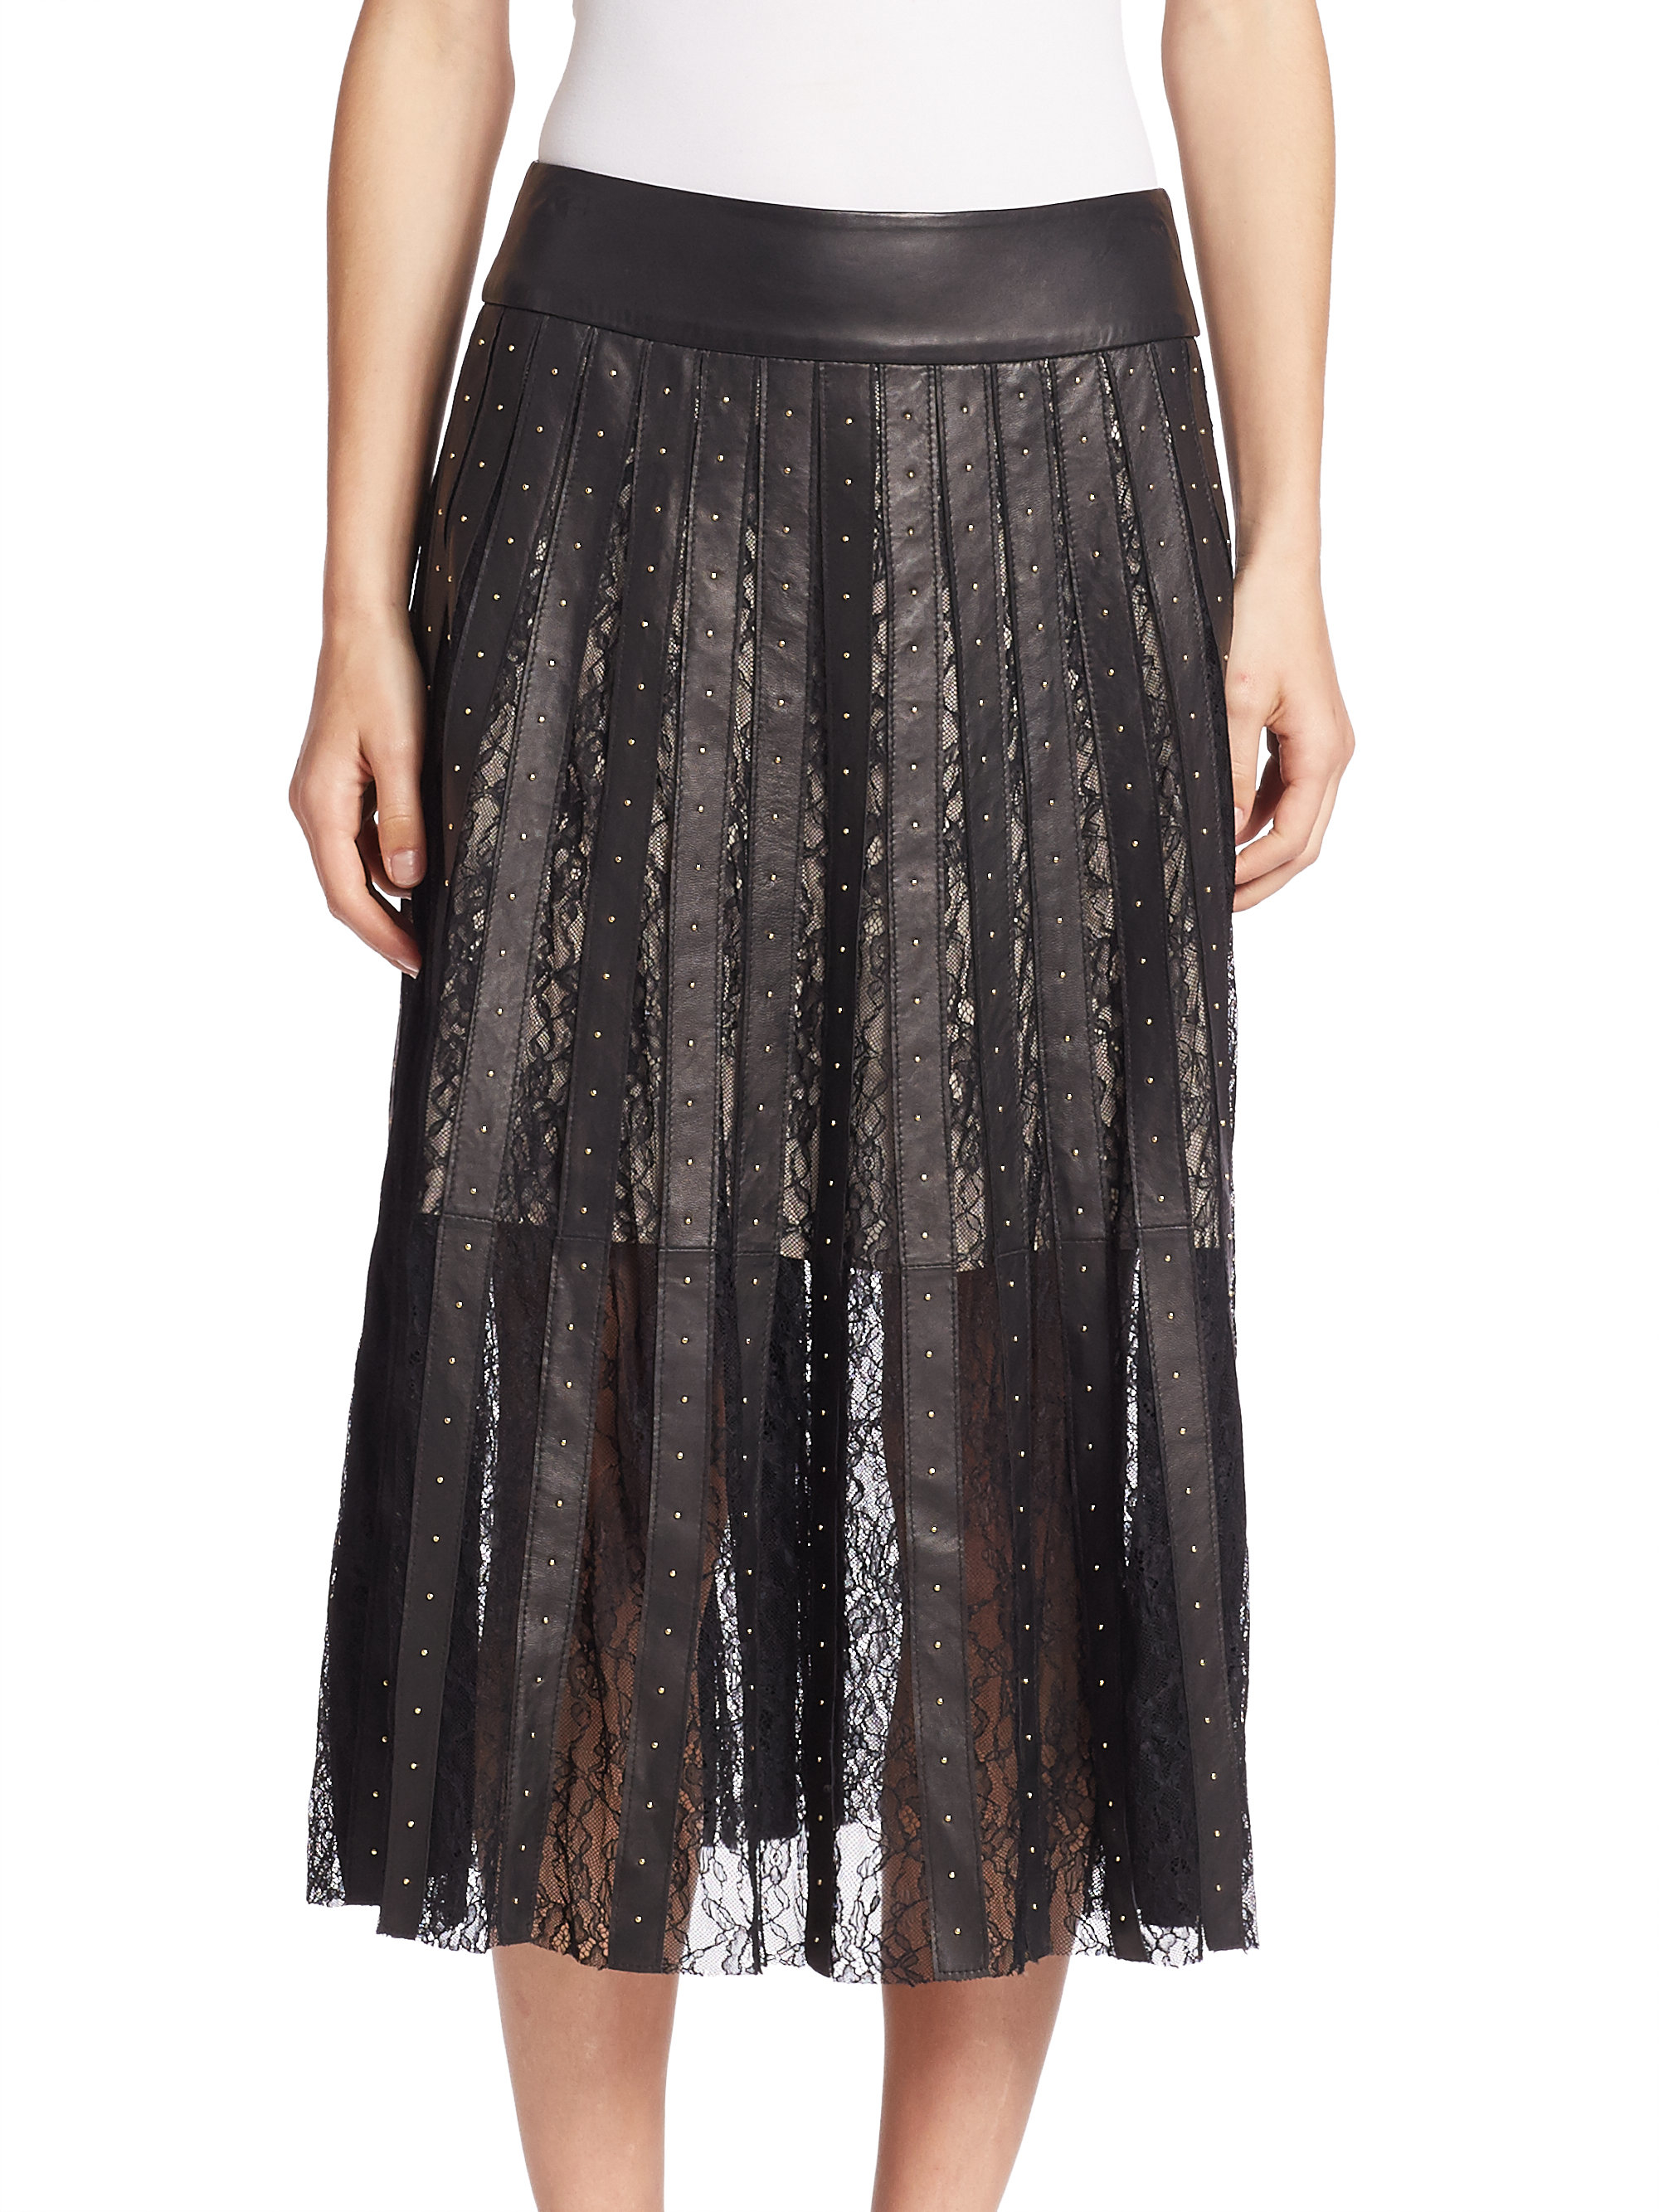 Alice + olivia Tianna Lace Panel Leather Midi Skirt in Black | Lyst